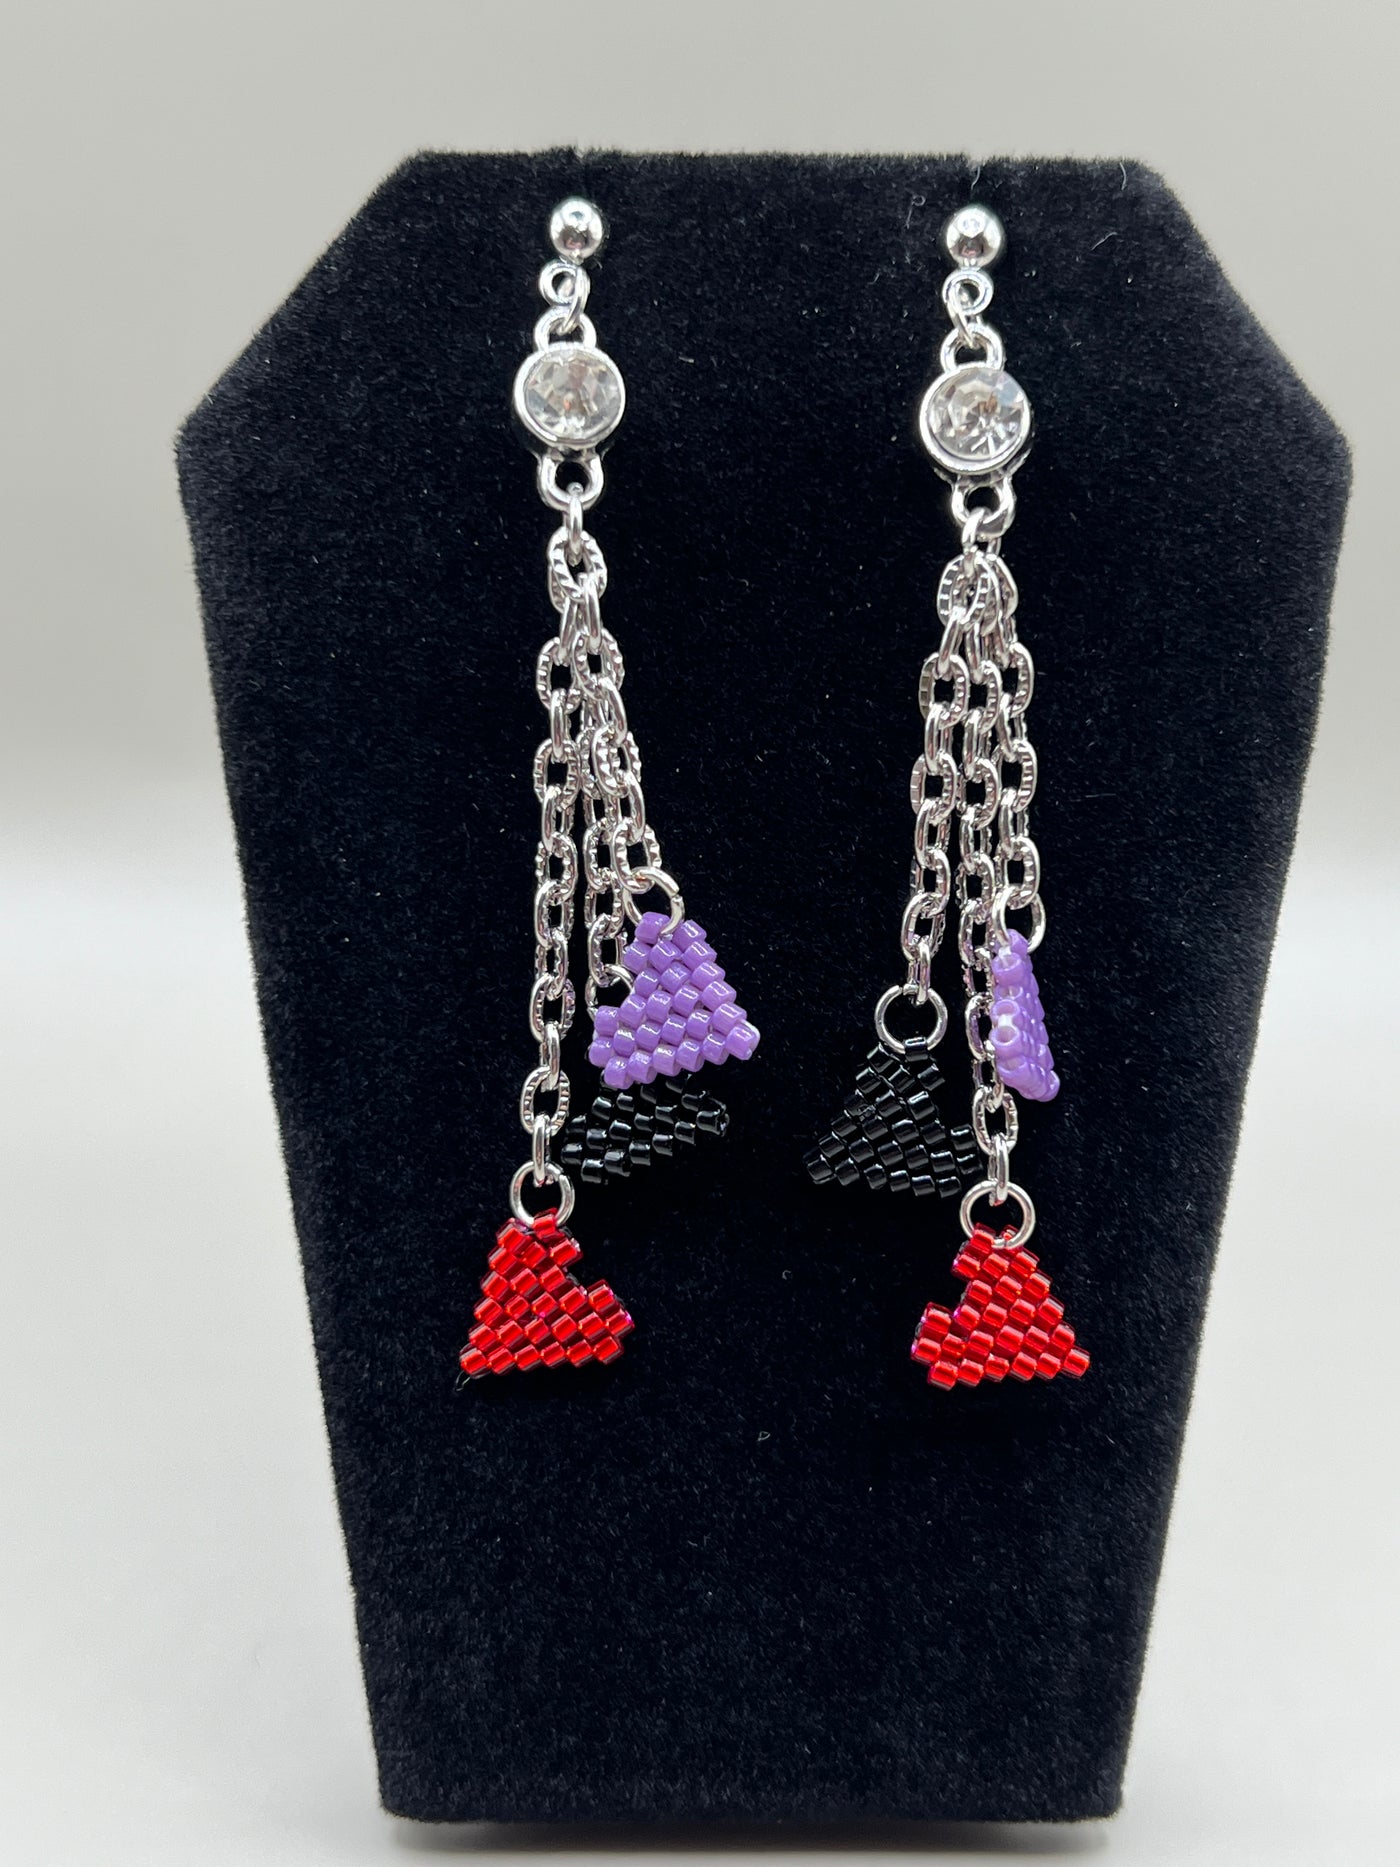 Triple Heart Valentine Earrings - Red/Black/Purple with Rhinestone